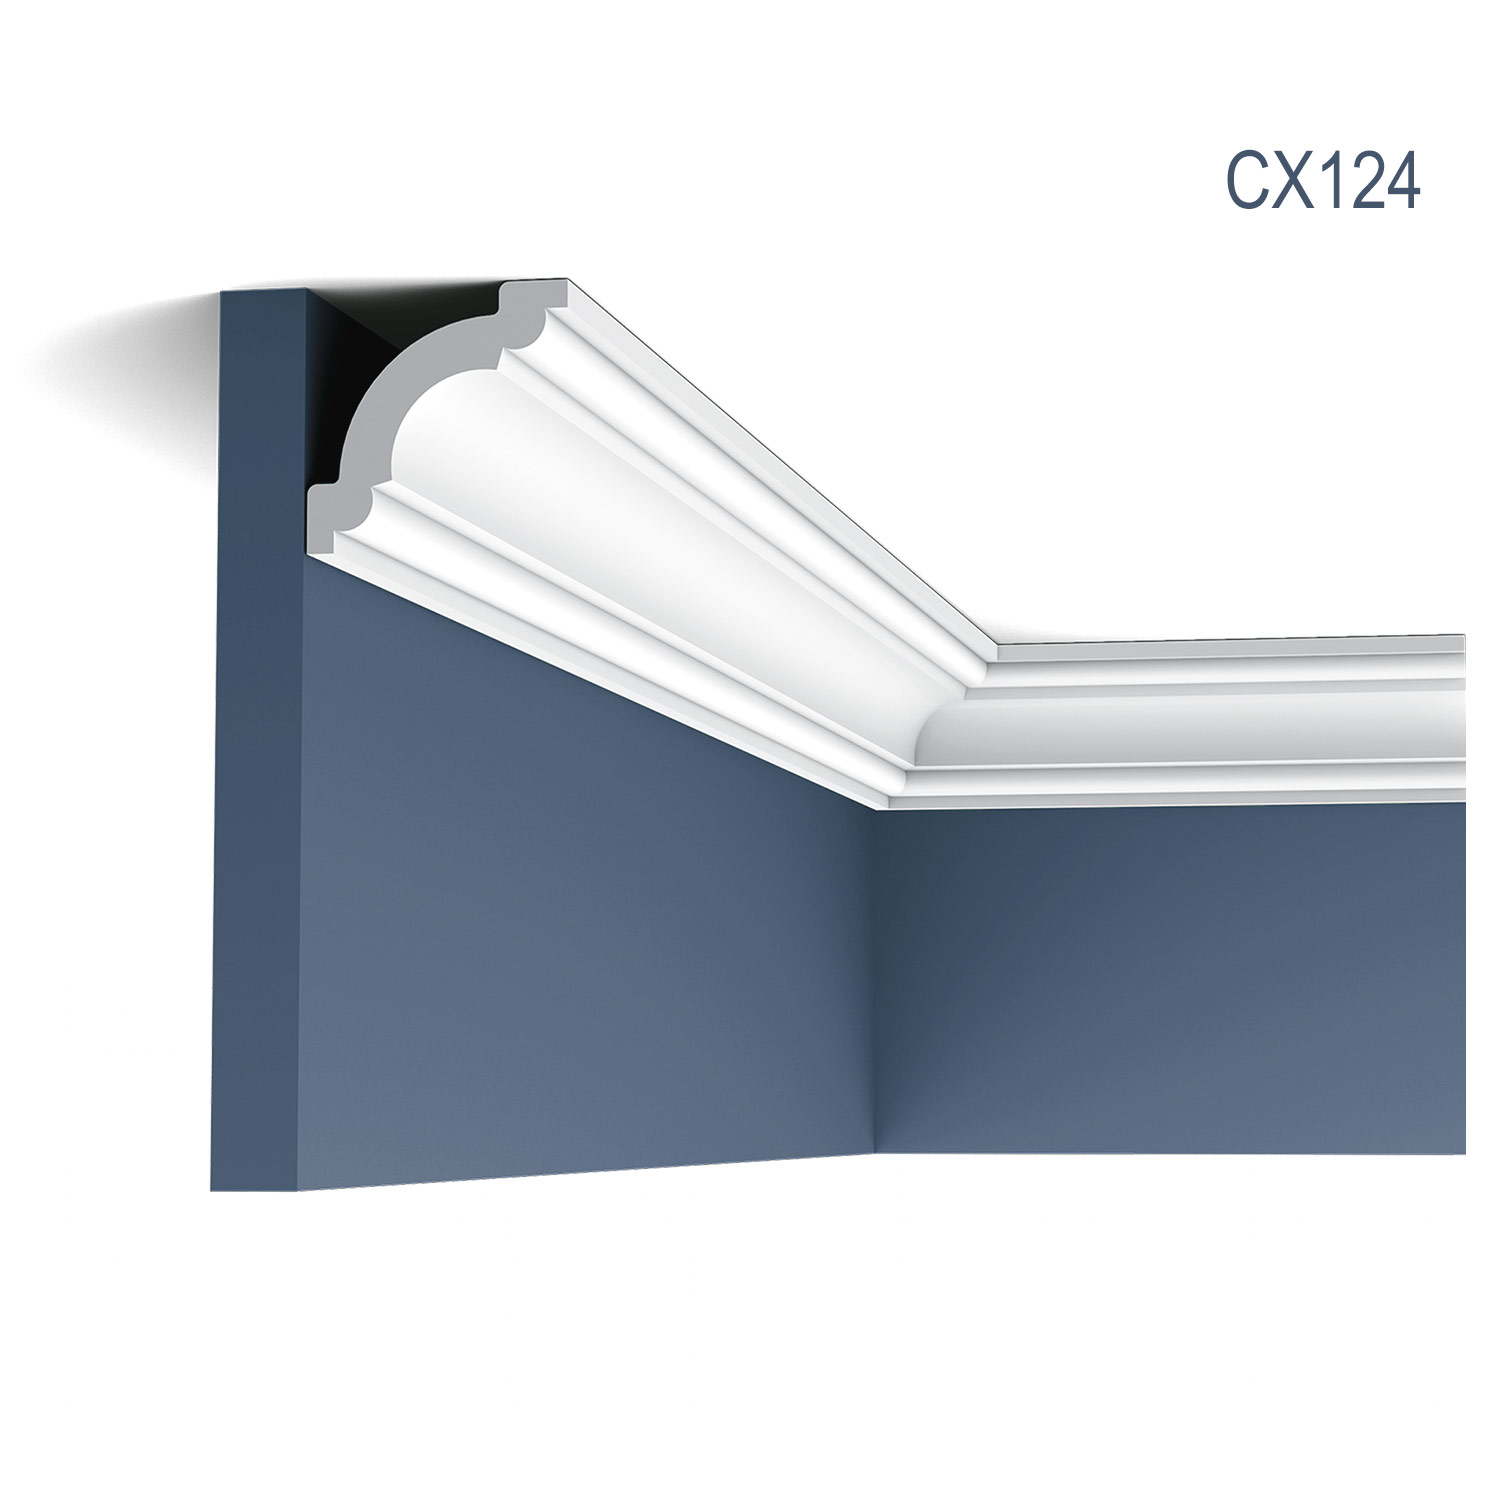 Cornisa CX124 pentru tavan, alba, vopsibila, rigida, calitate excelenta, Belgia, din Duropolimer, L 200 x H 4,9 x L 4,9 cm